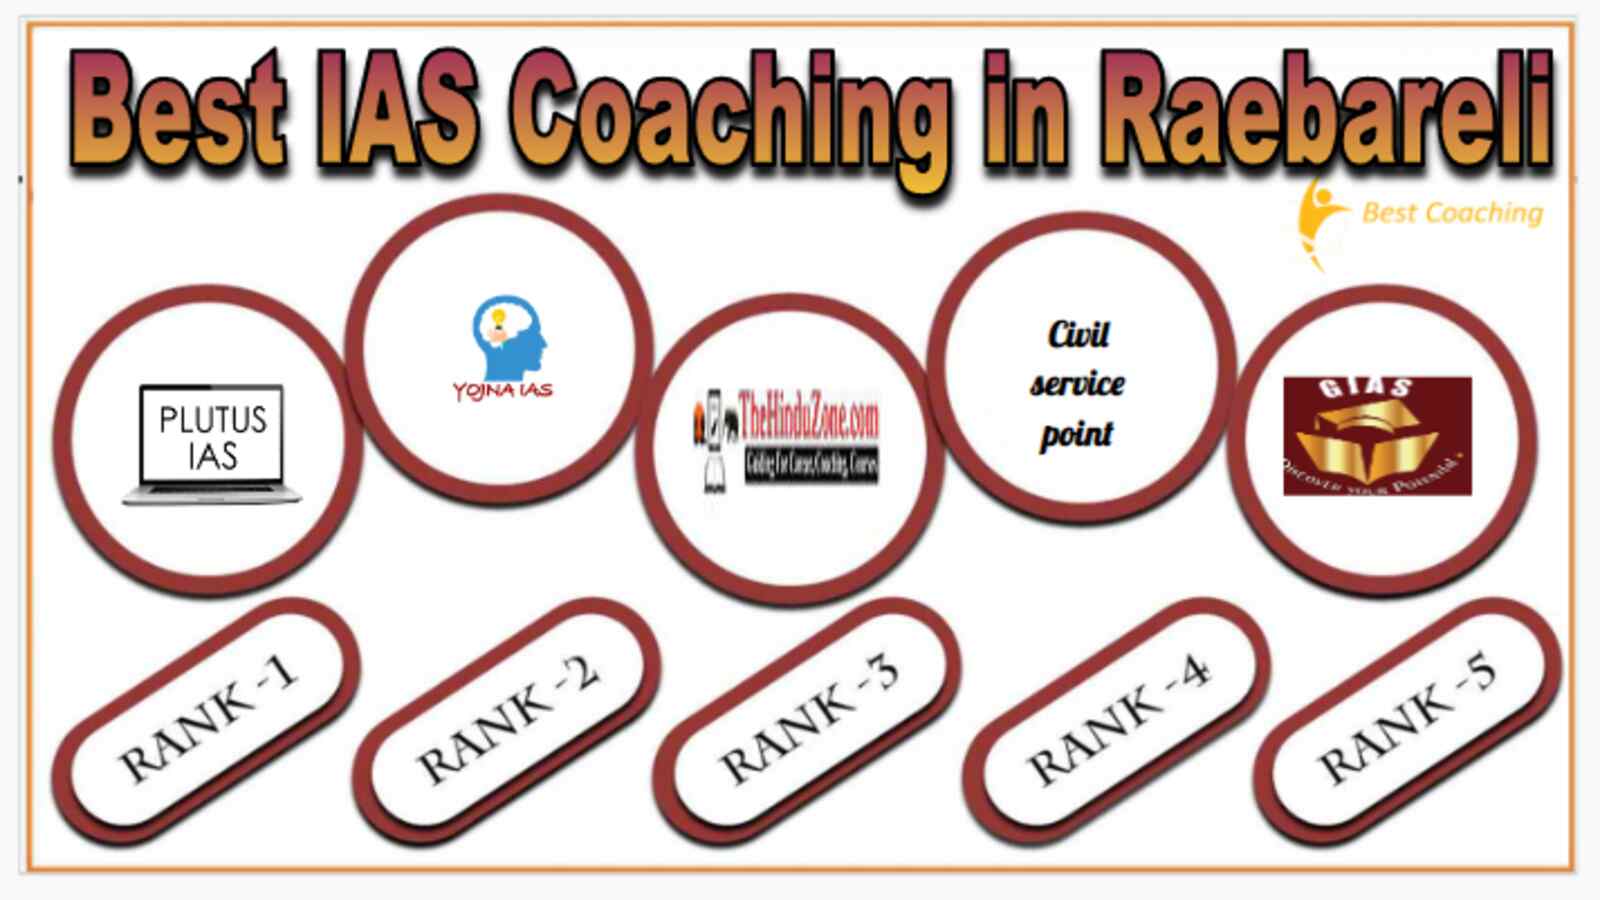 Best IAS Coaching in Raebareli